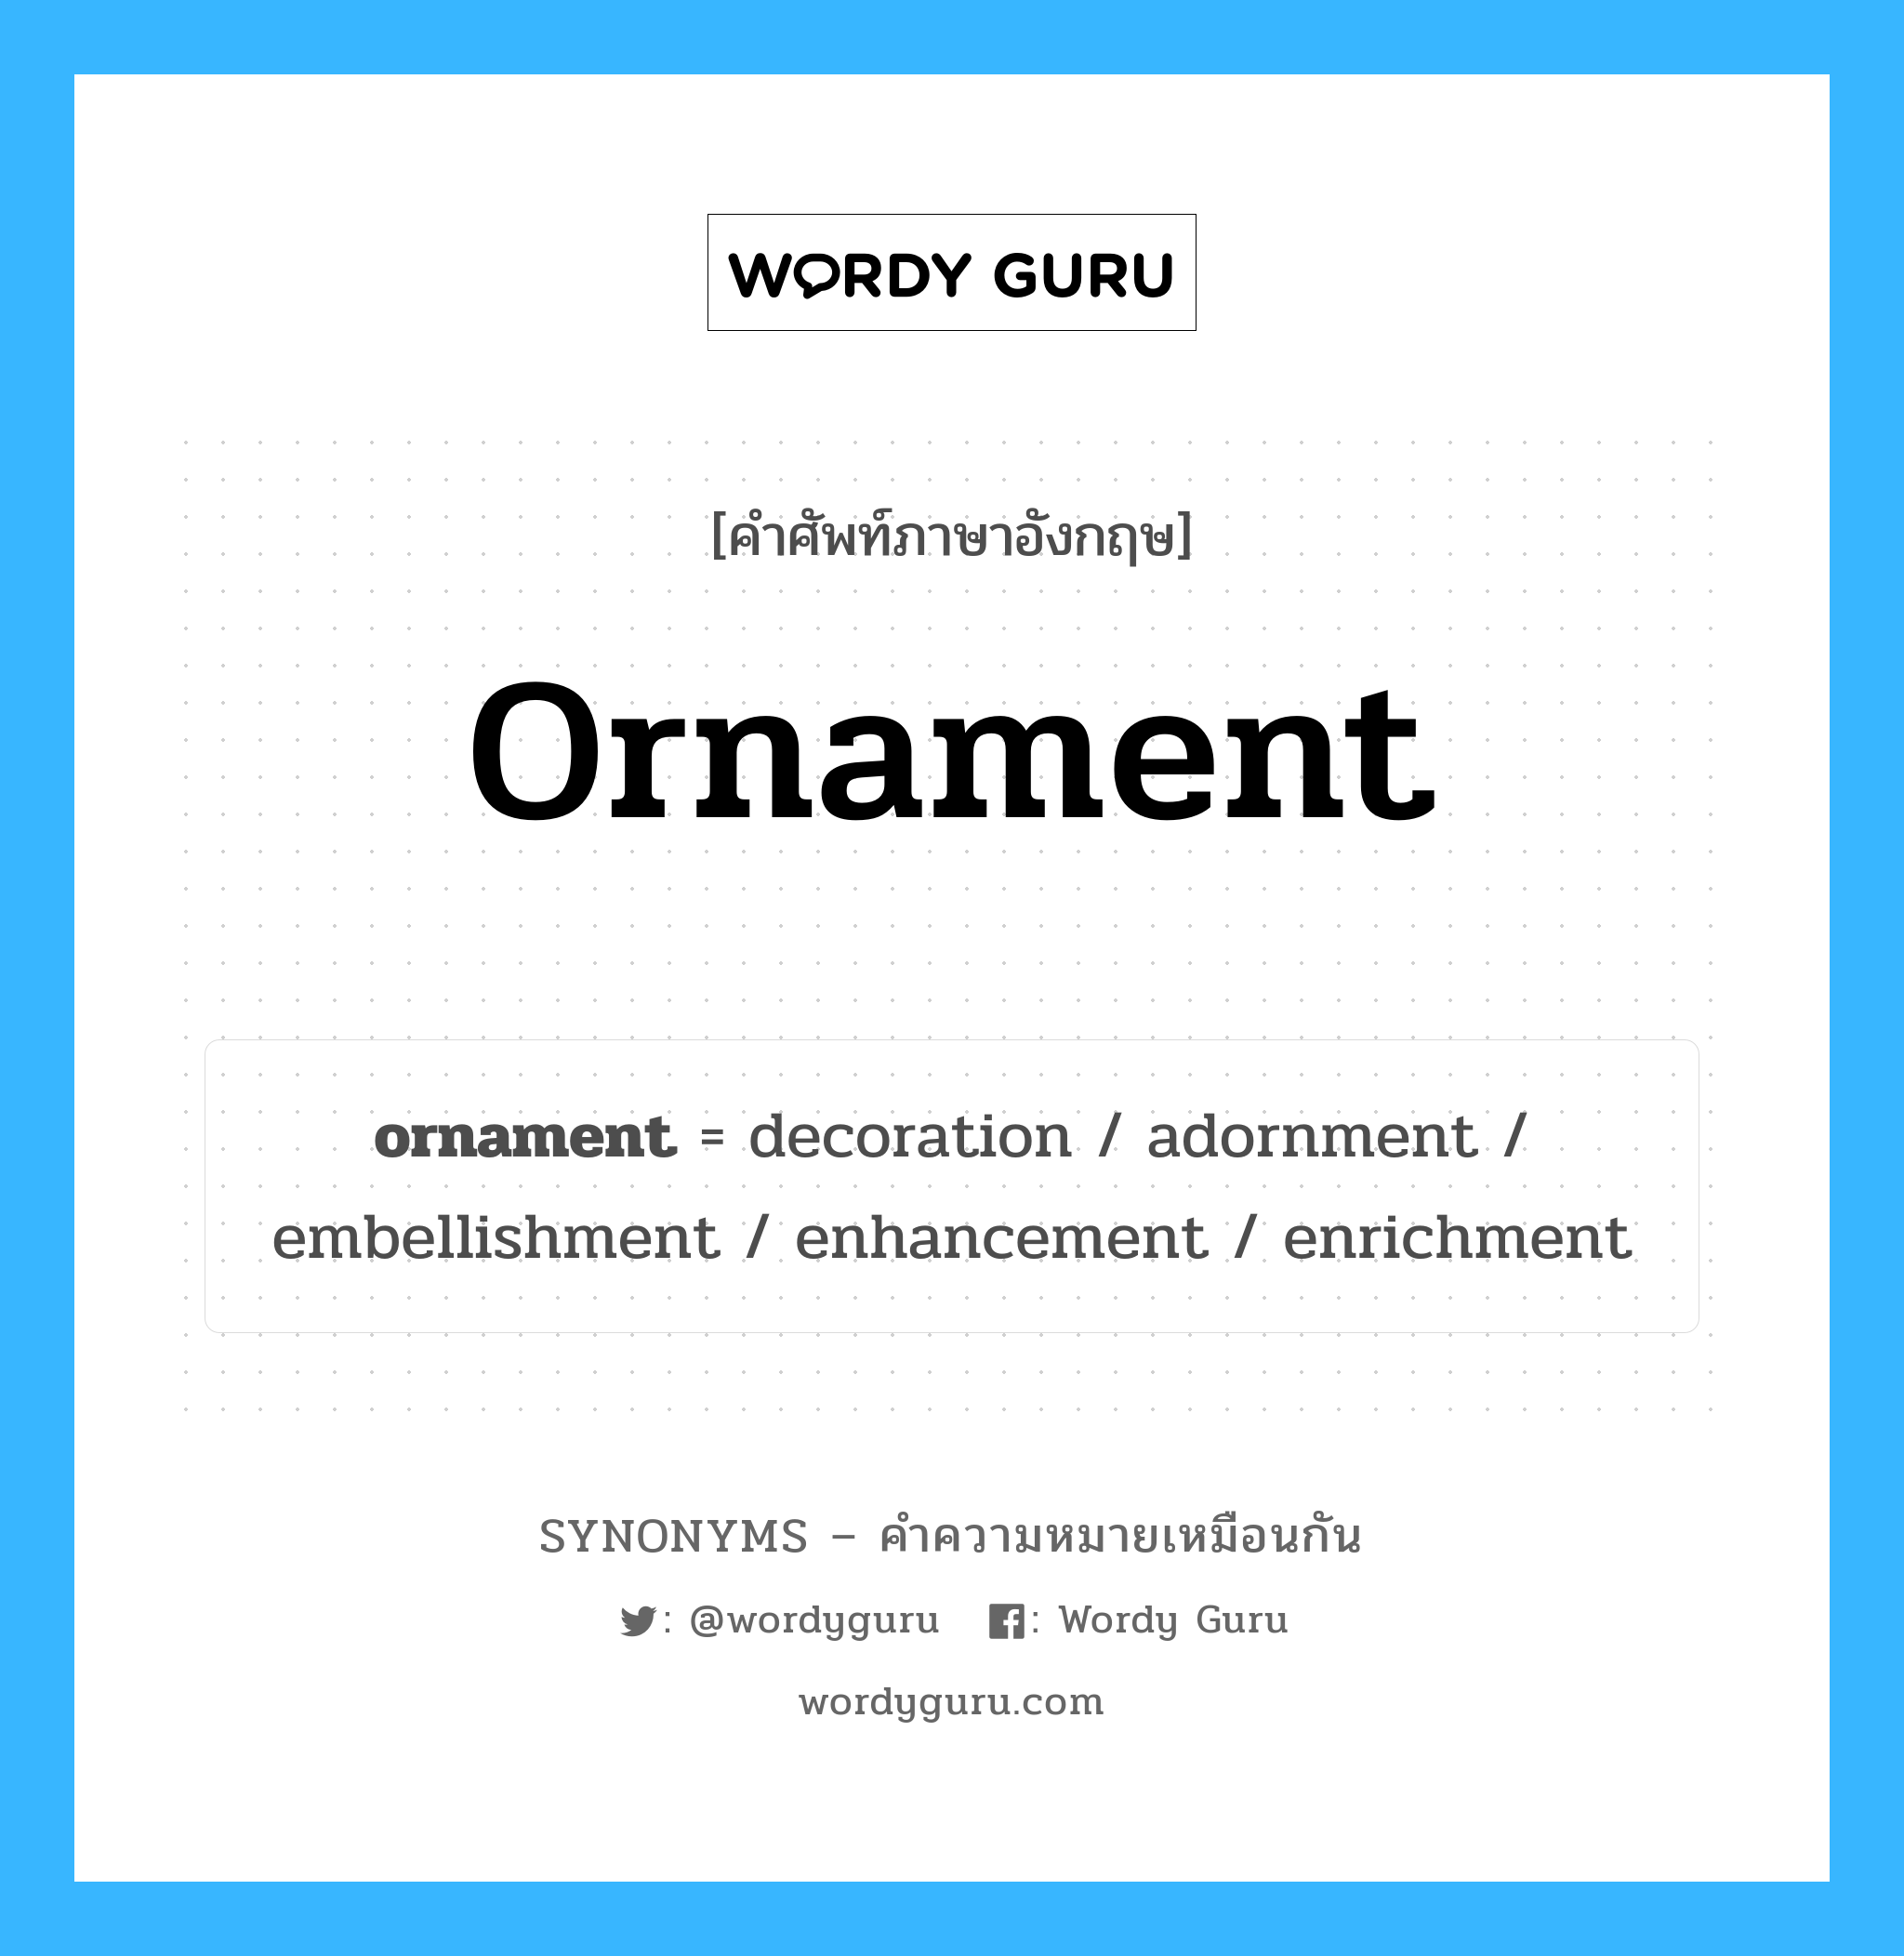 enrichment เป็นหนึ่งใน ornament และมีคำอื่น ๆ อีกดังนี้, คำศัพท์ภาษาอังกฤษ enrichment ความหมายคล้ายกันกับ ornament แปลว่า เพิ่มคุณค่า หมวด ornament